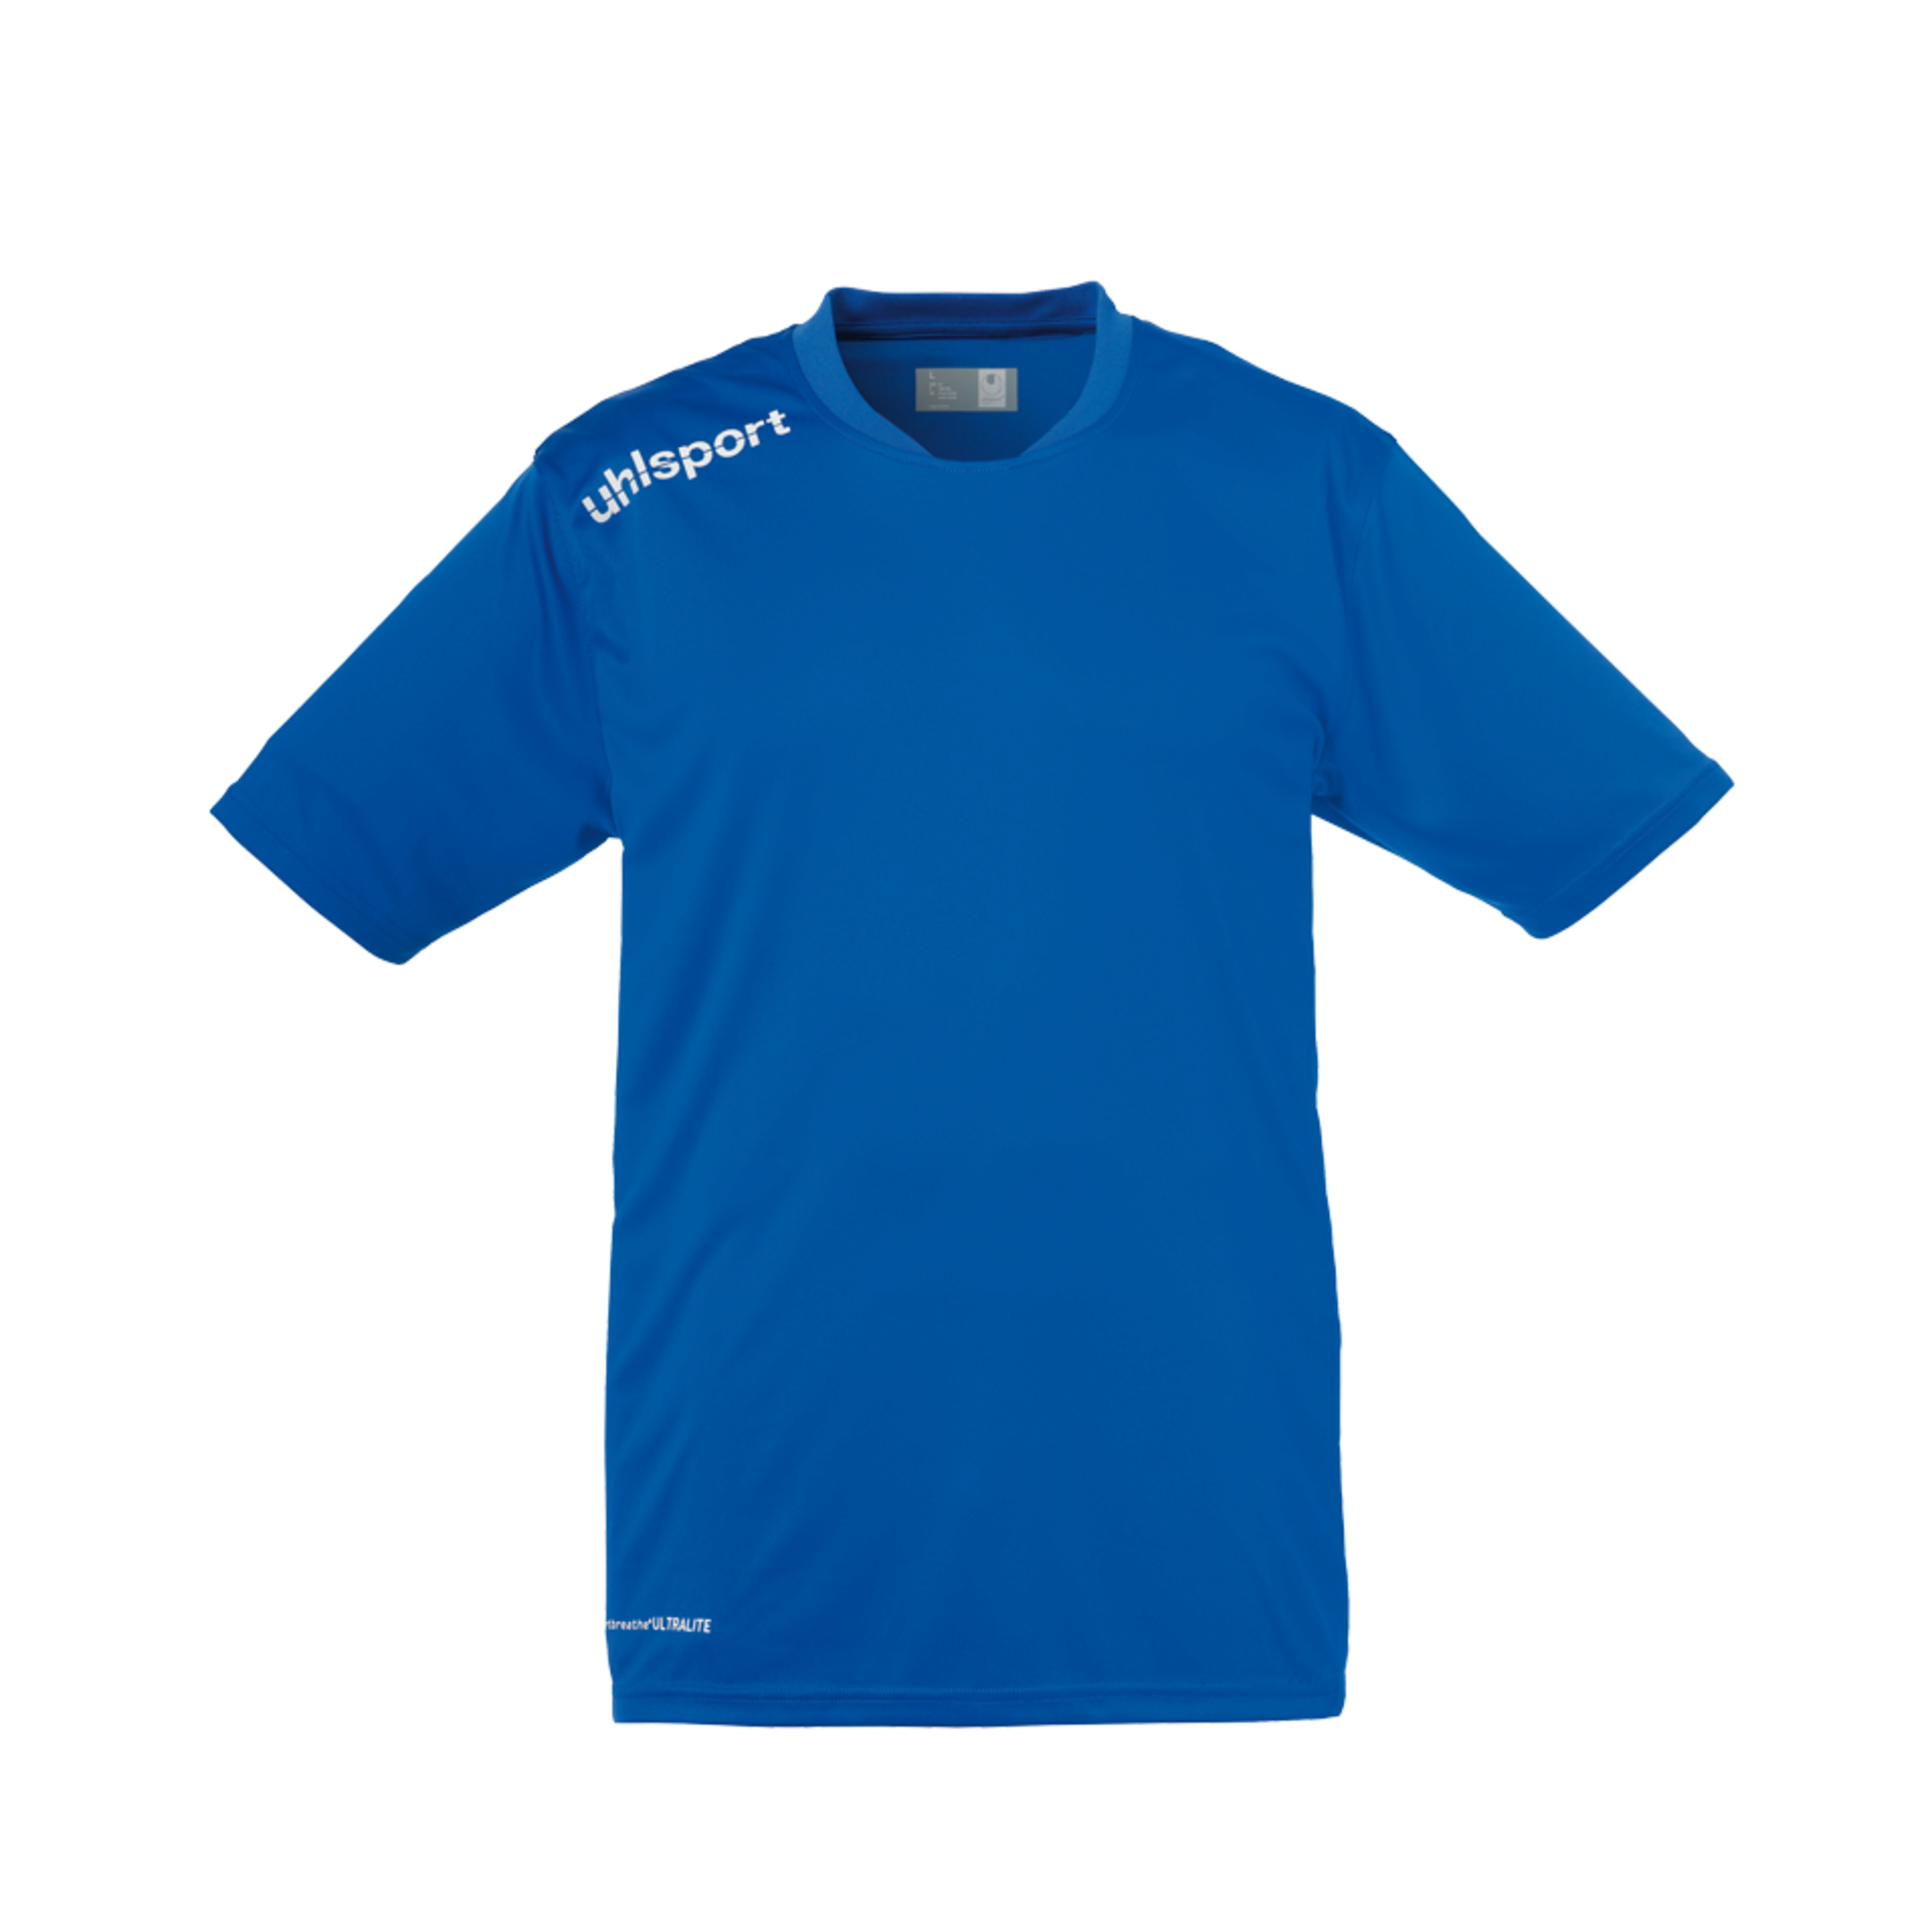 Essential Pes Camiseta De Entrenamiento Azur Uhlsport - azul - 